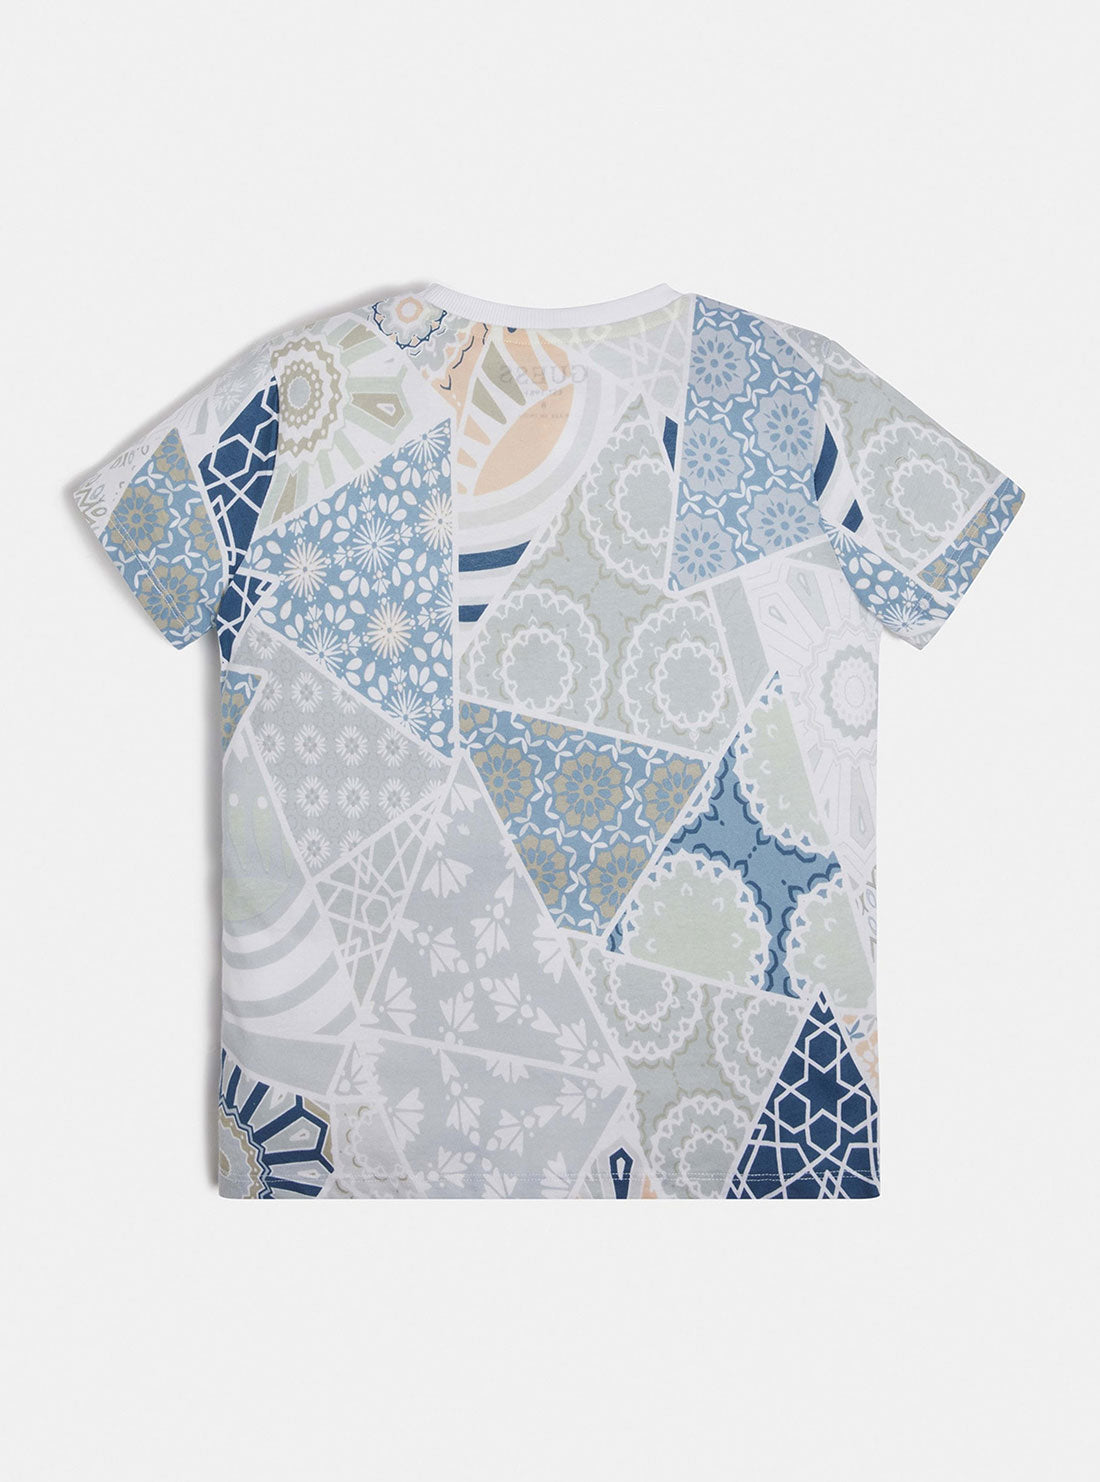 Boy's Blue Tile Print T-Shirt back view